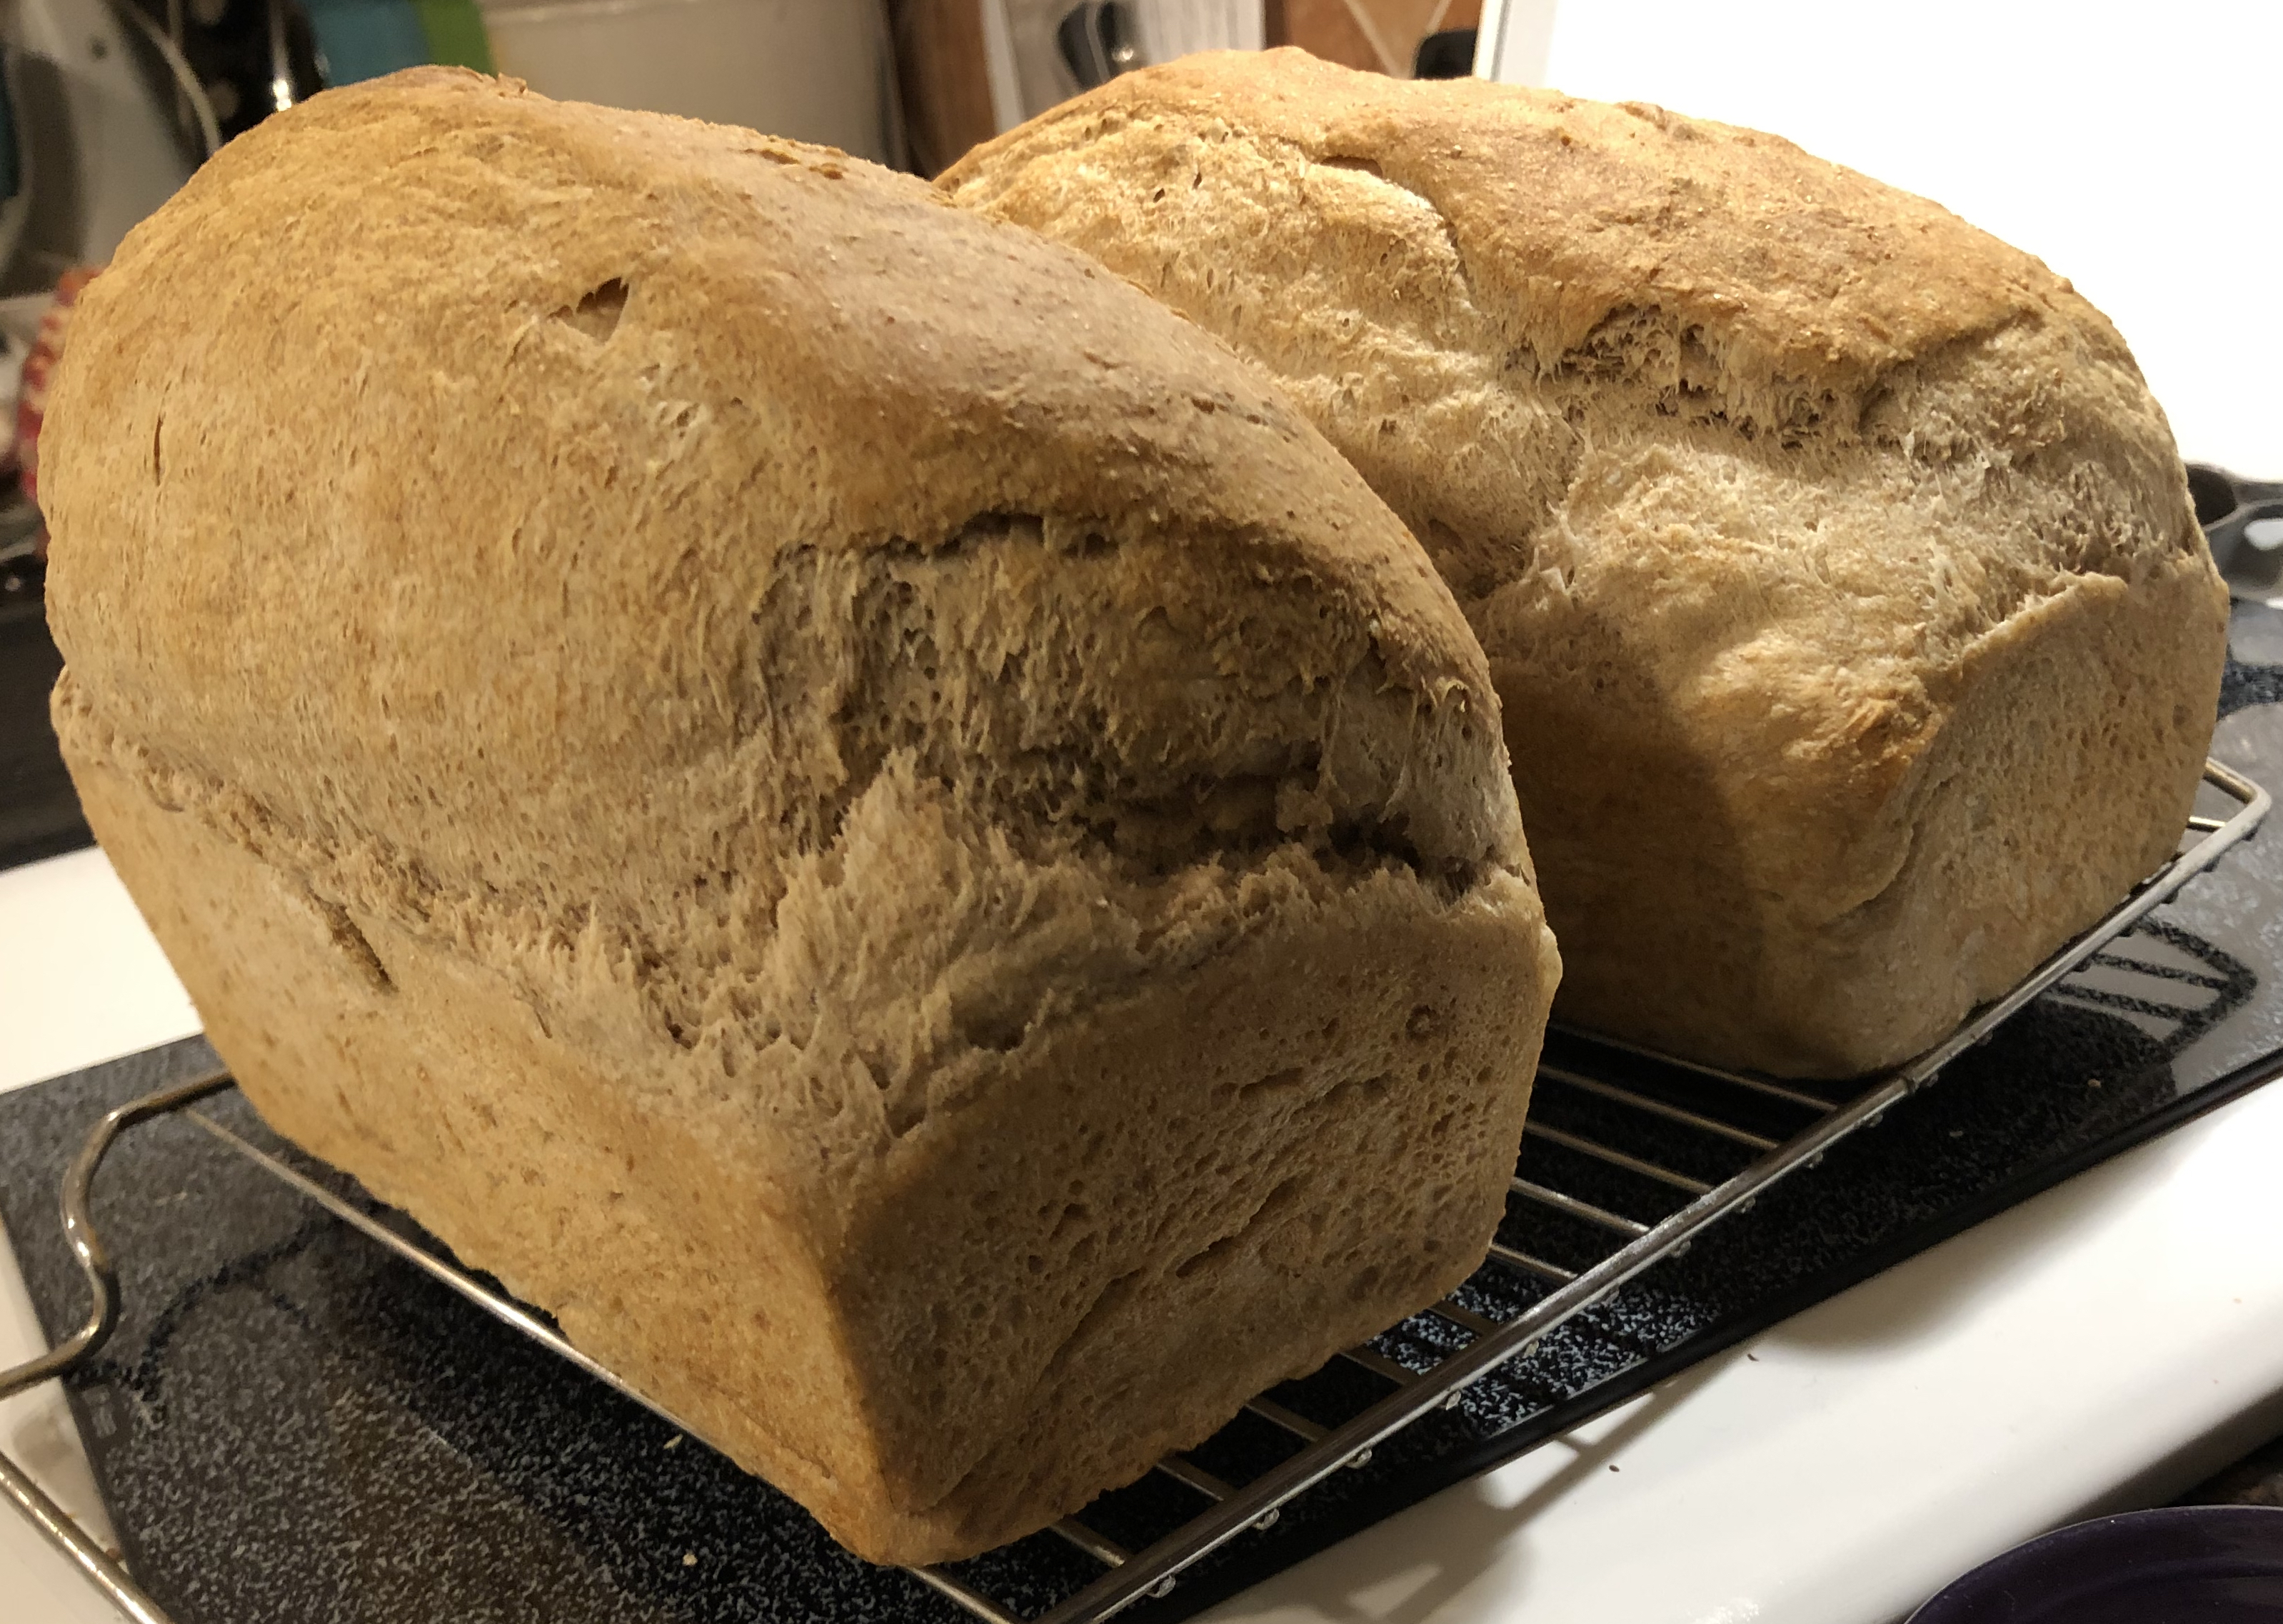 Underproofed loaves